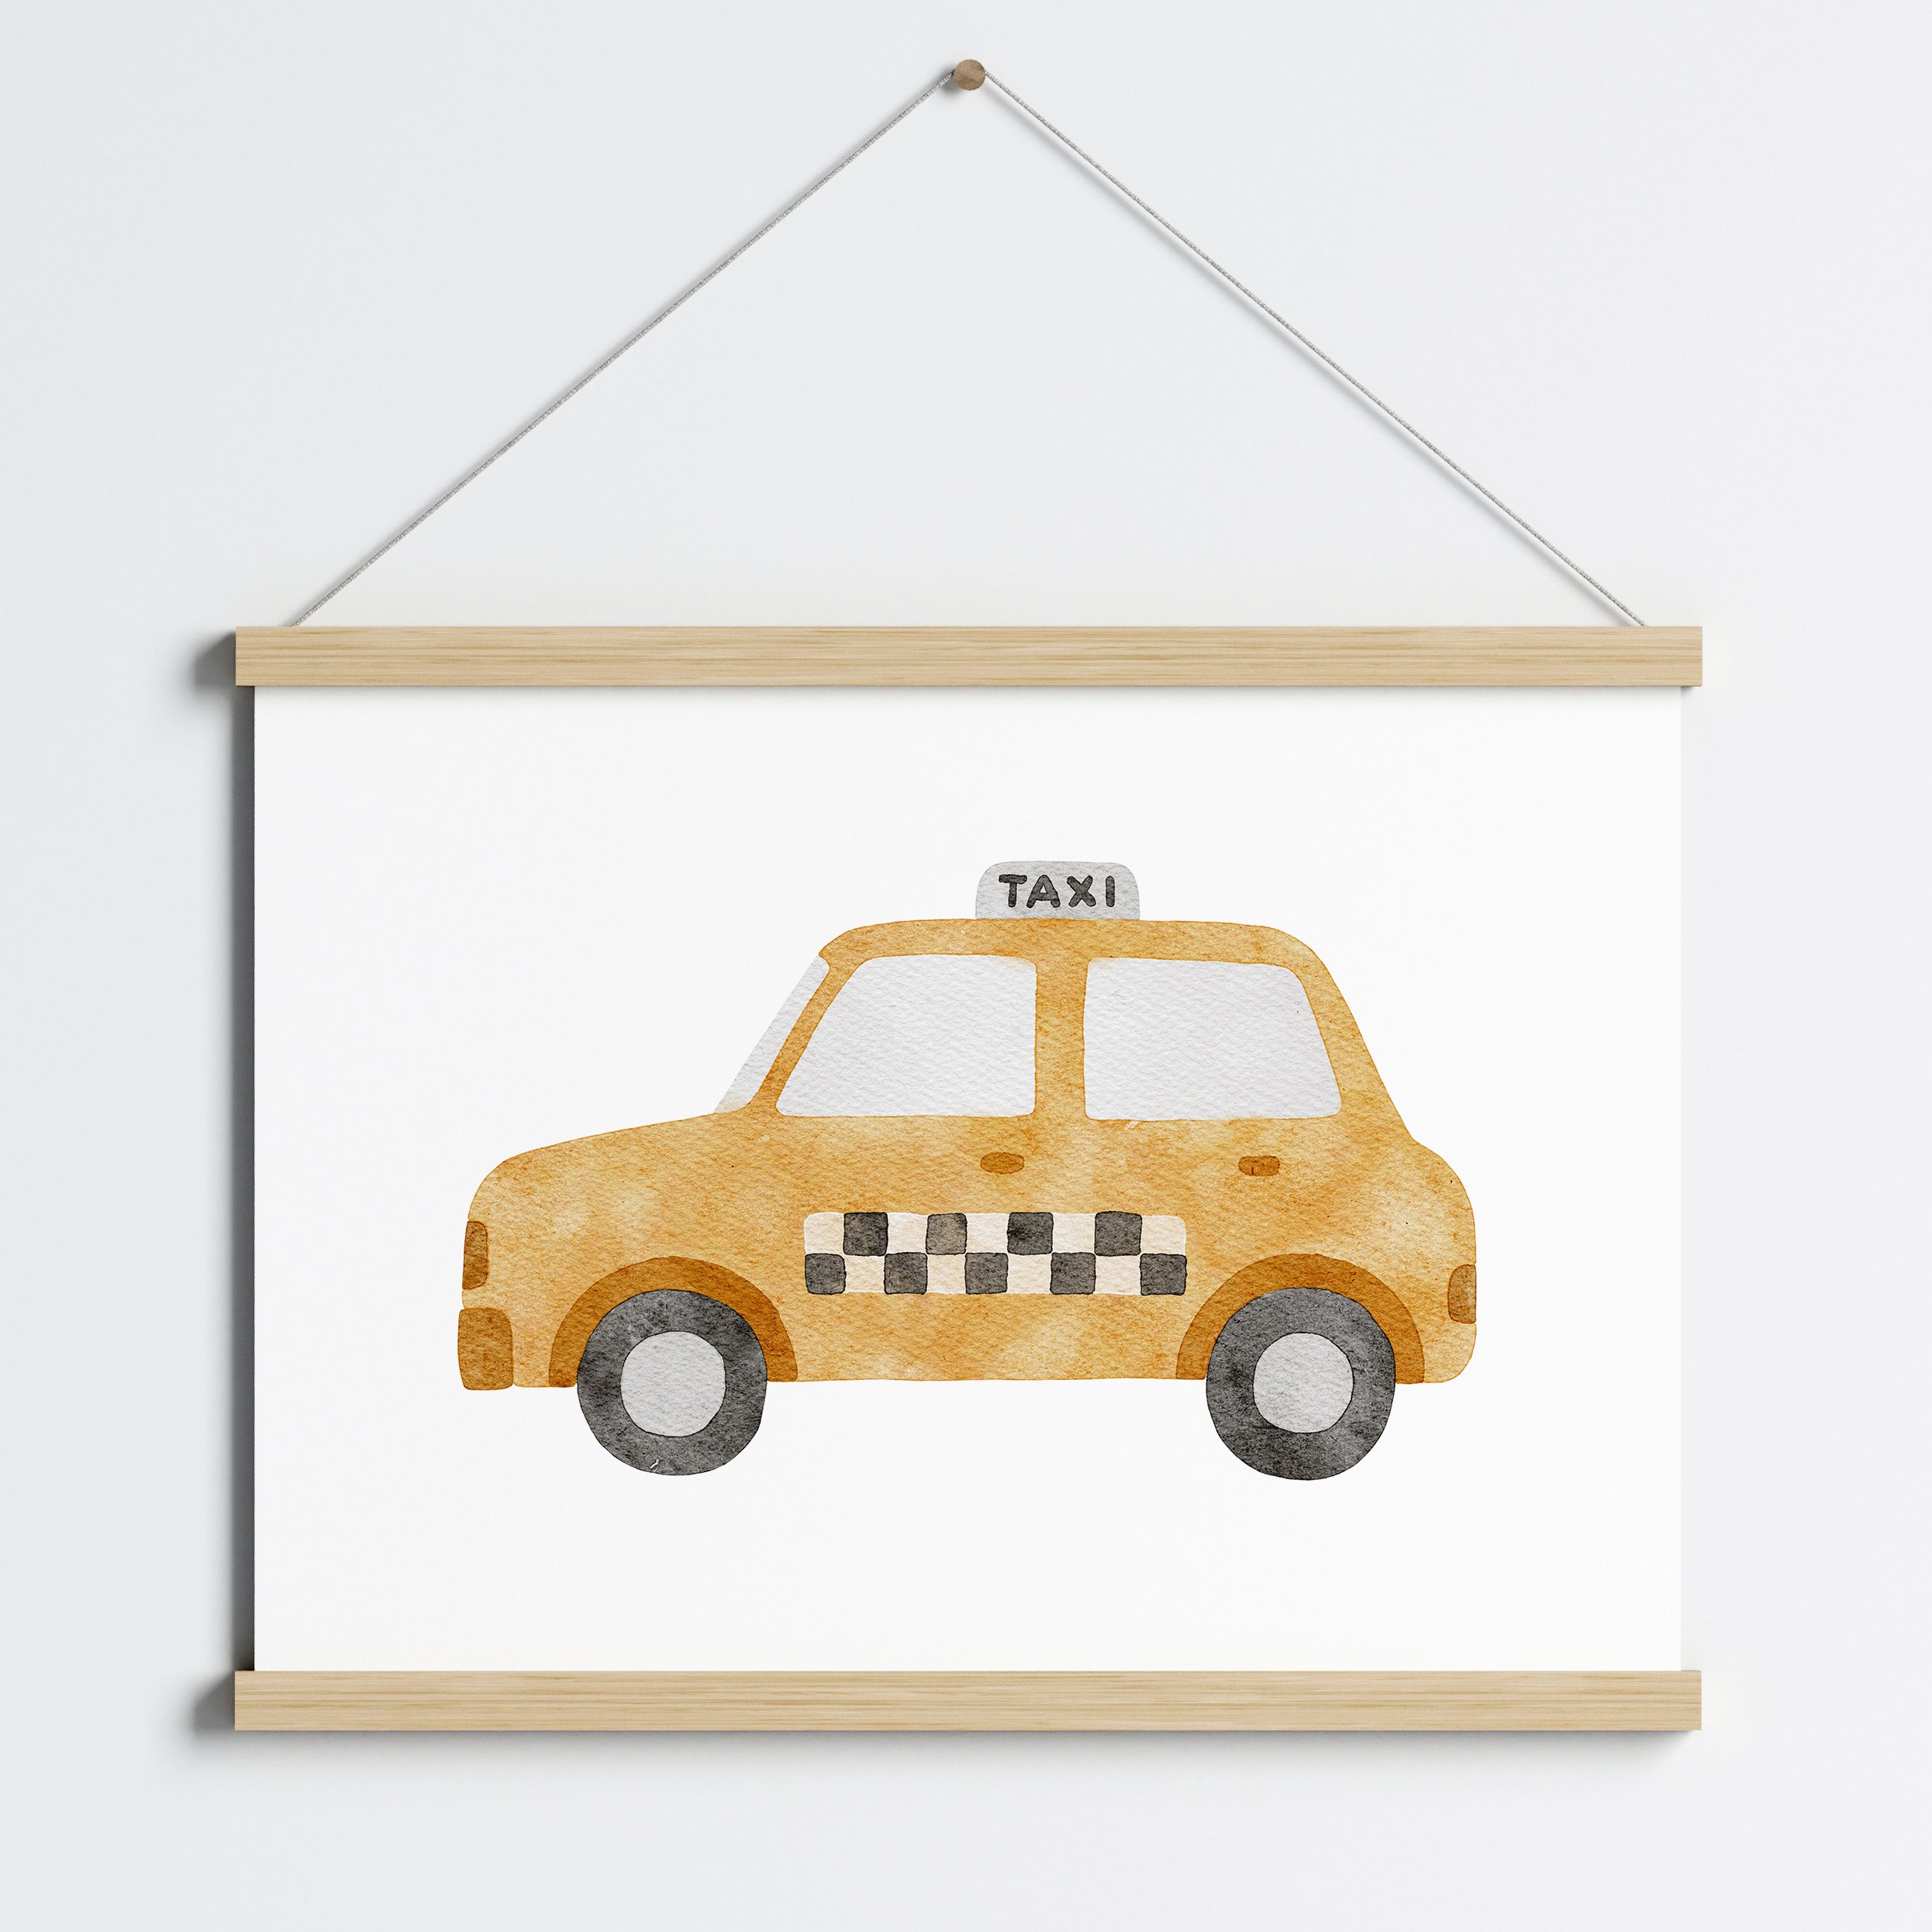 Taxi Print